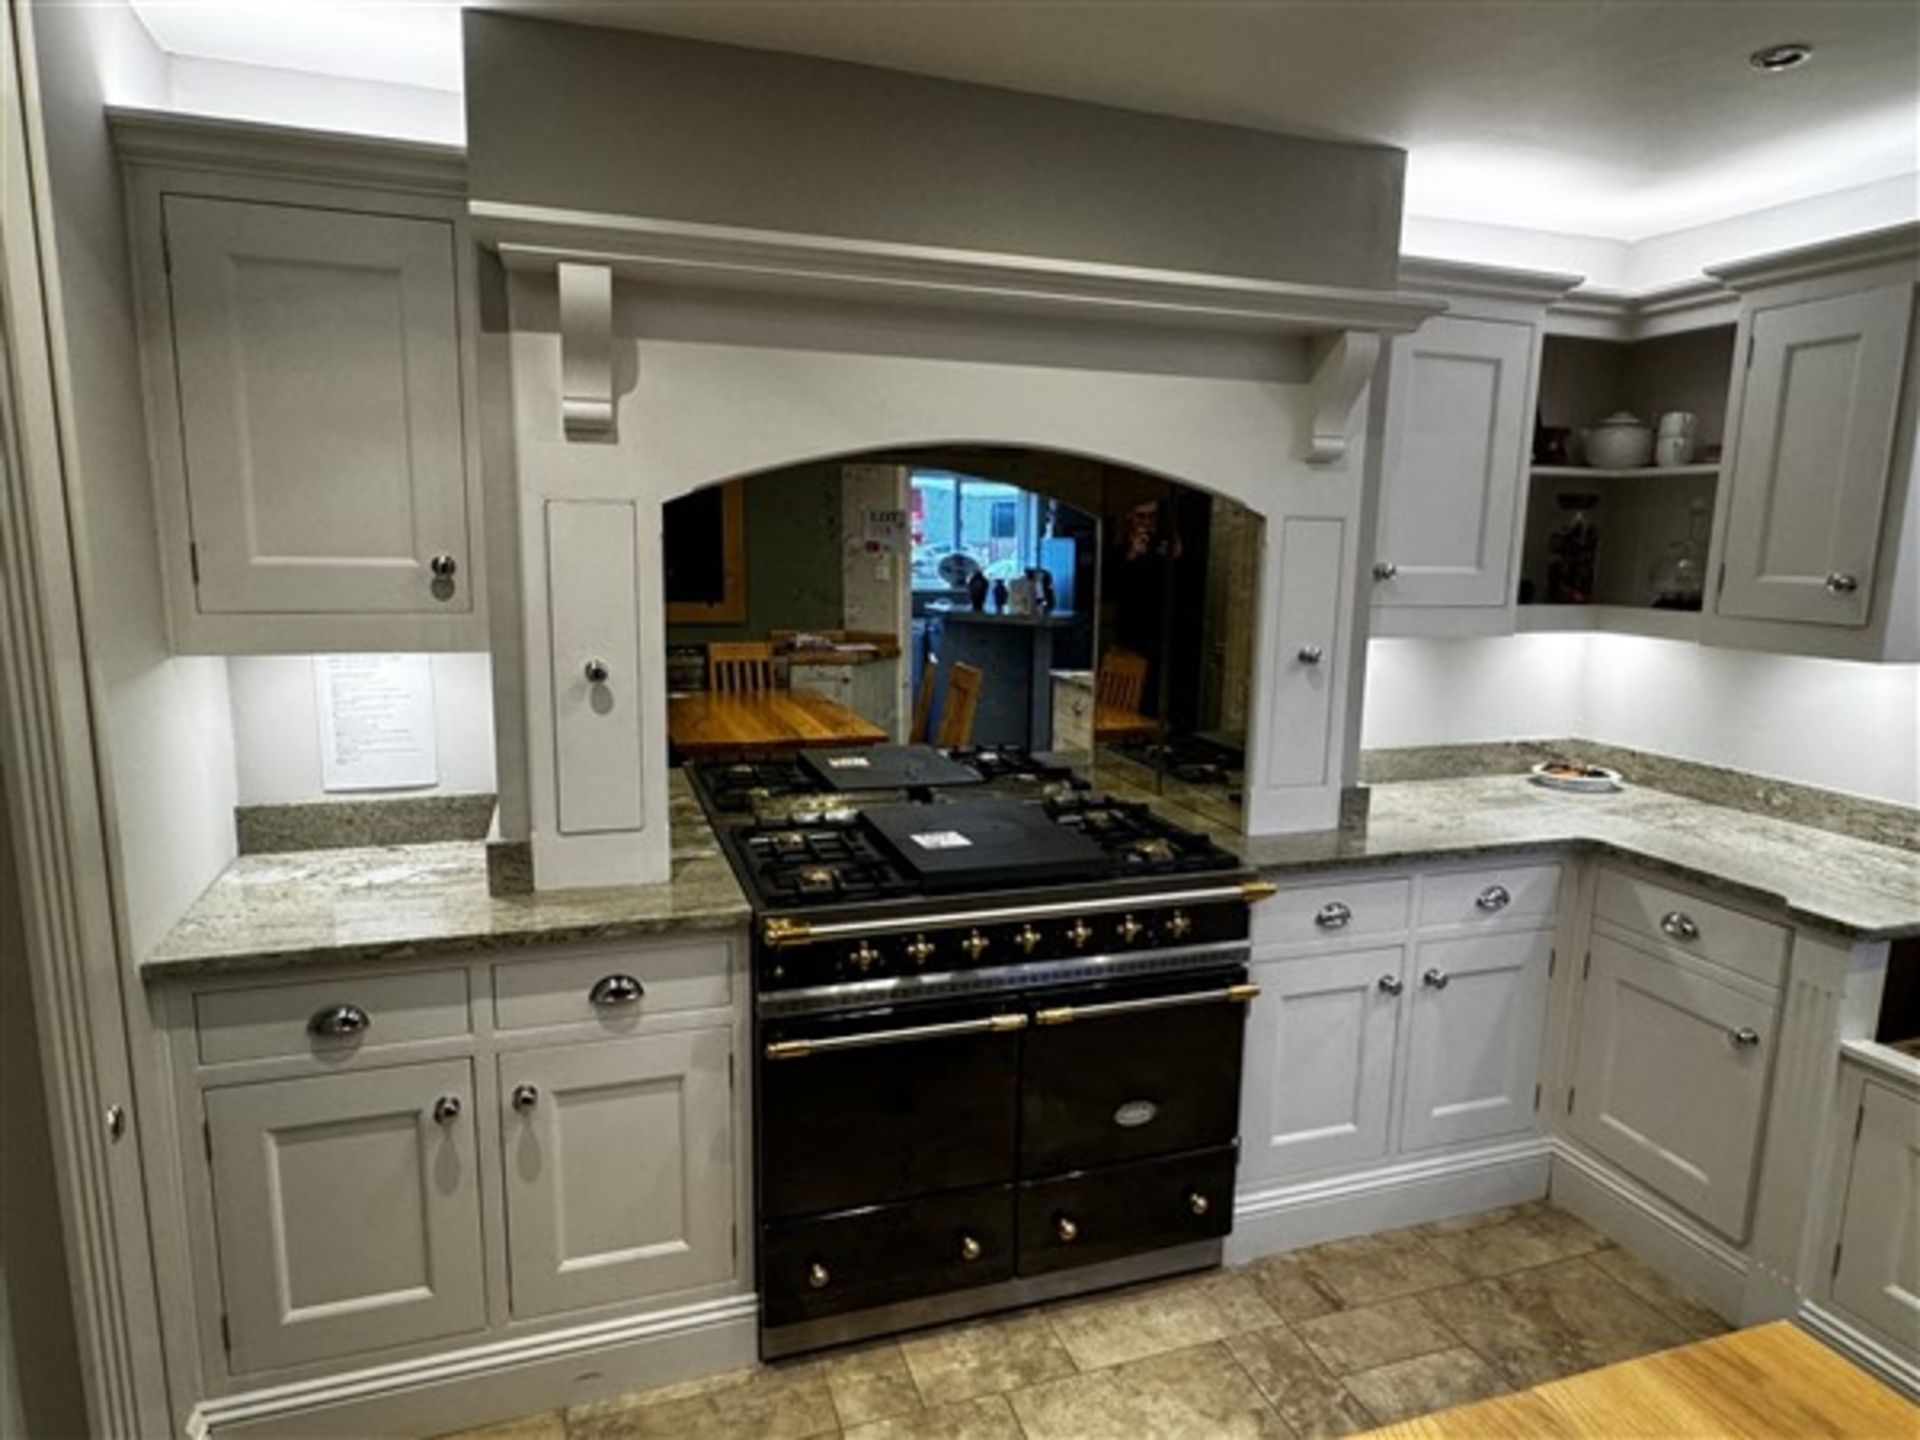 Complete ex-demo kitchen fittings comprising of 1 x 600mm base unit, 1 x 1000mm corner base unit,